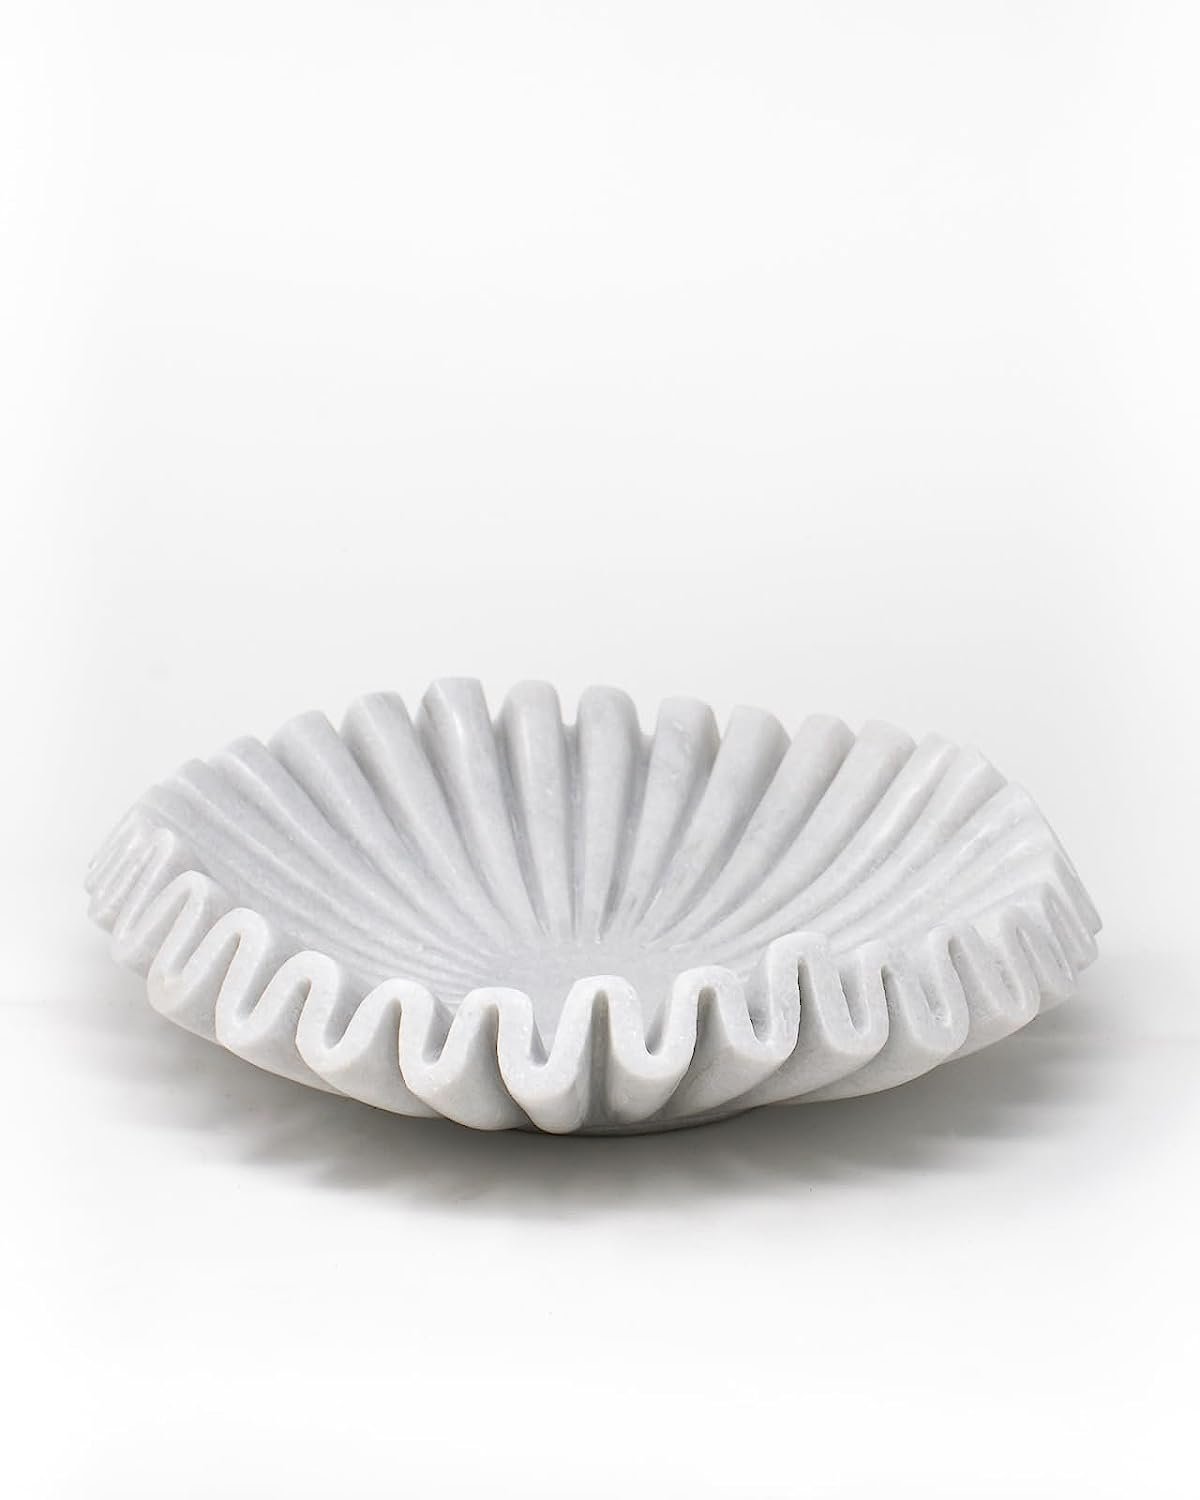 White Marble Decorative Ruffle Bowl - $99.95